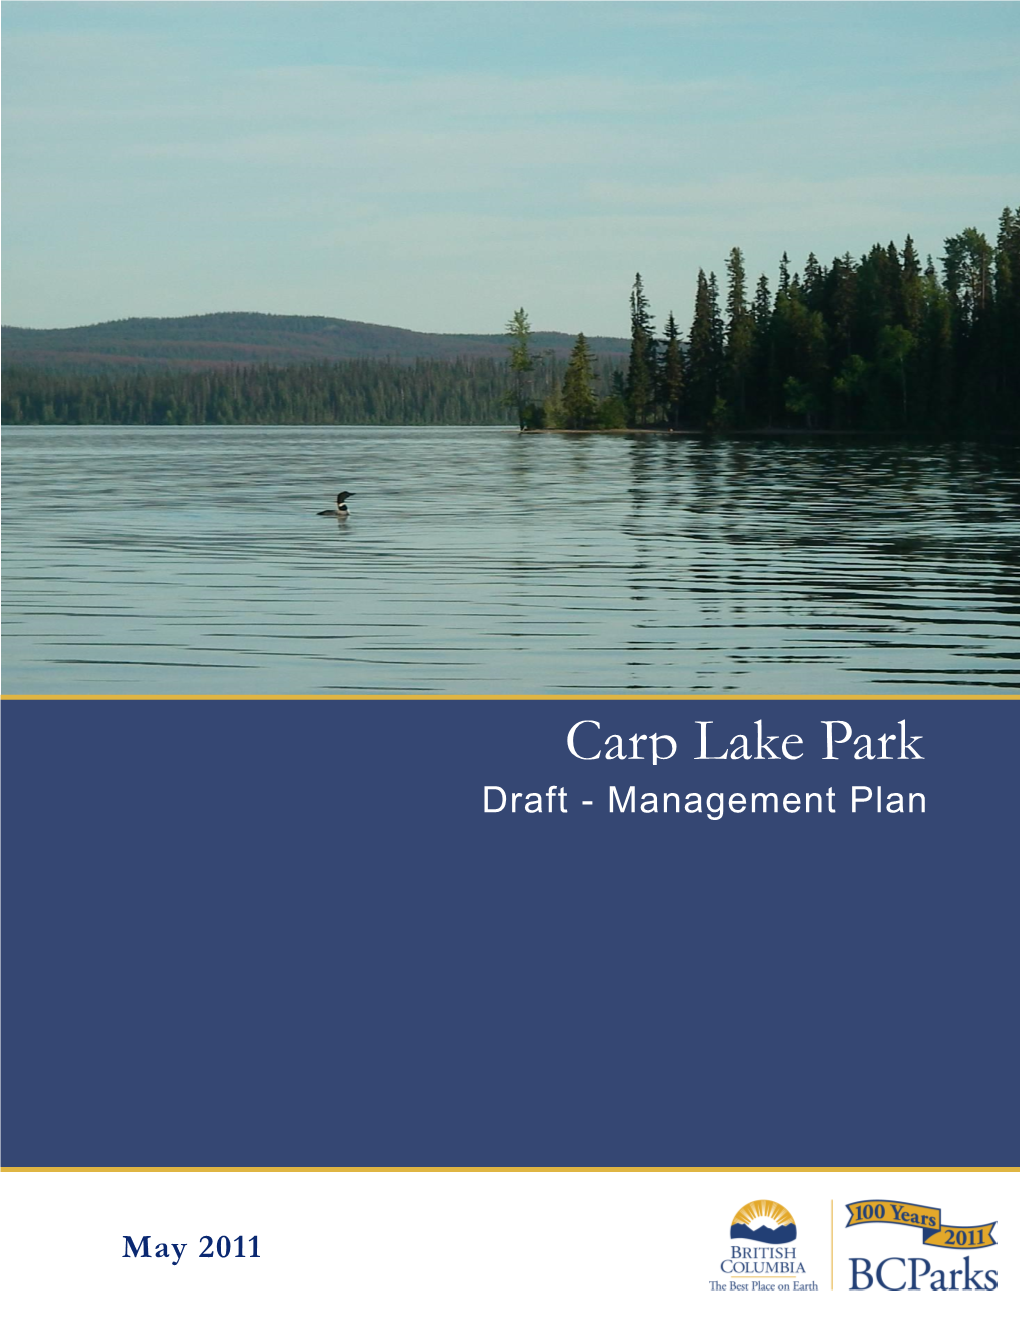 Carp Lake Provincial Park Management Plan Draft